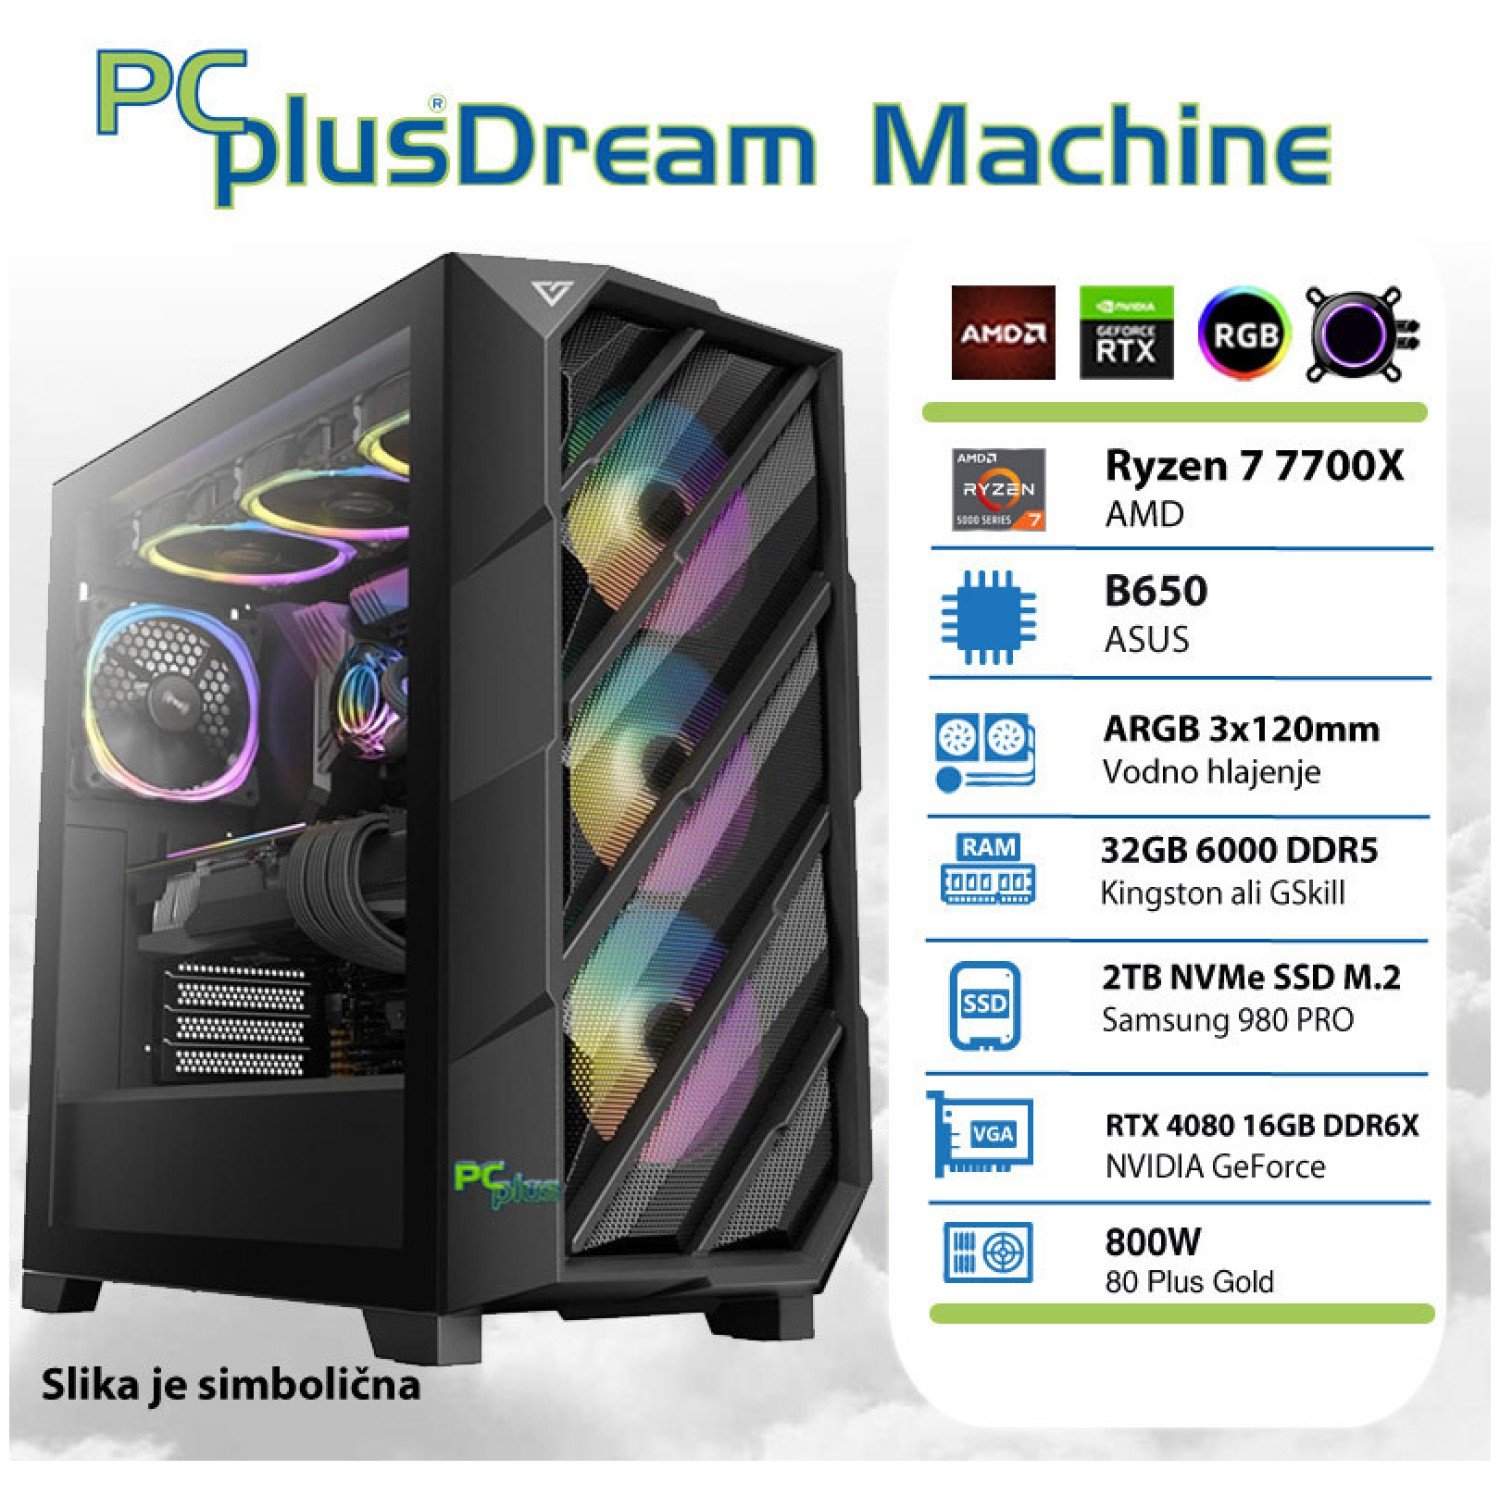 PCPLUS Dream Machine Ryzen 7 7700X 32GB 2TB NVMe SSD GeForce RTX 4080 16GB vodno hlajenje gaming namizni računalnik